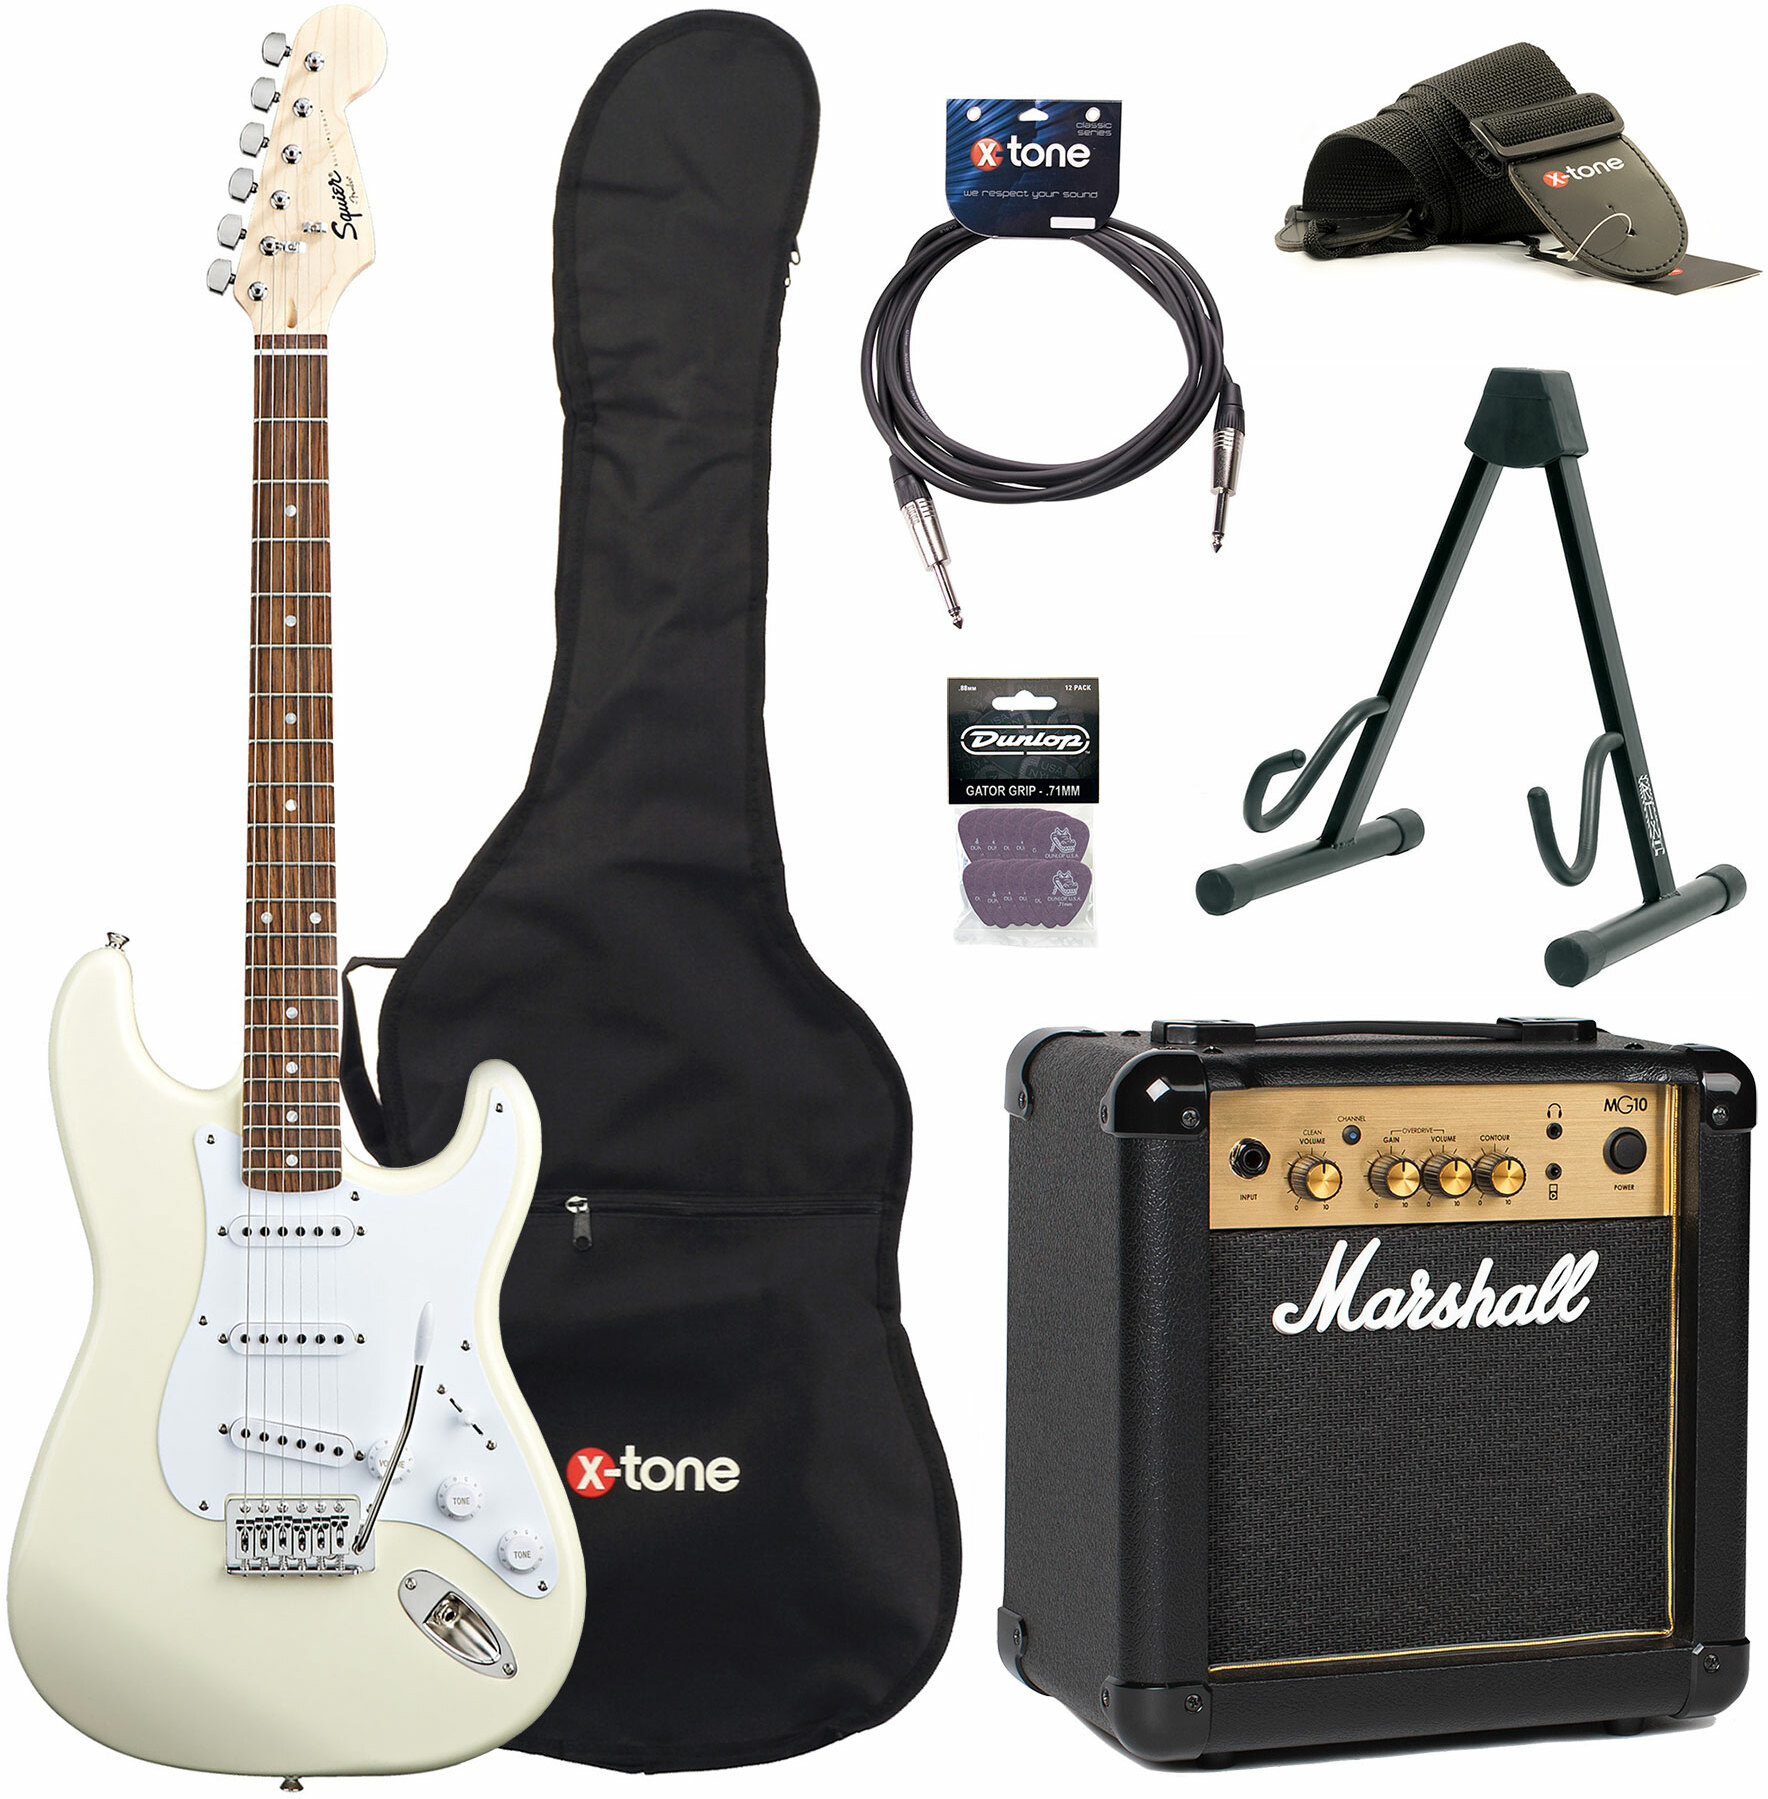 Squier Strat Bullet Sss + Marshall Mg10g + Access X-tone - Arctic White - Elektrische gitaar set - Main picture